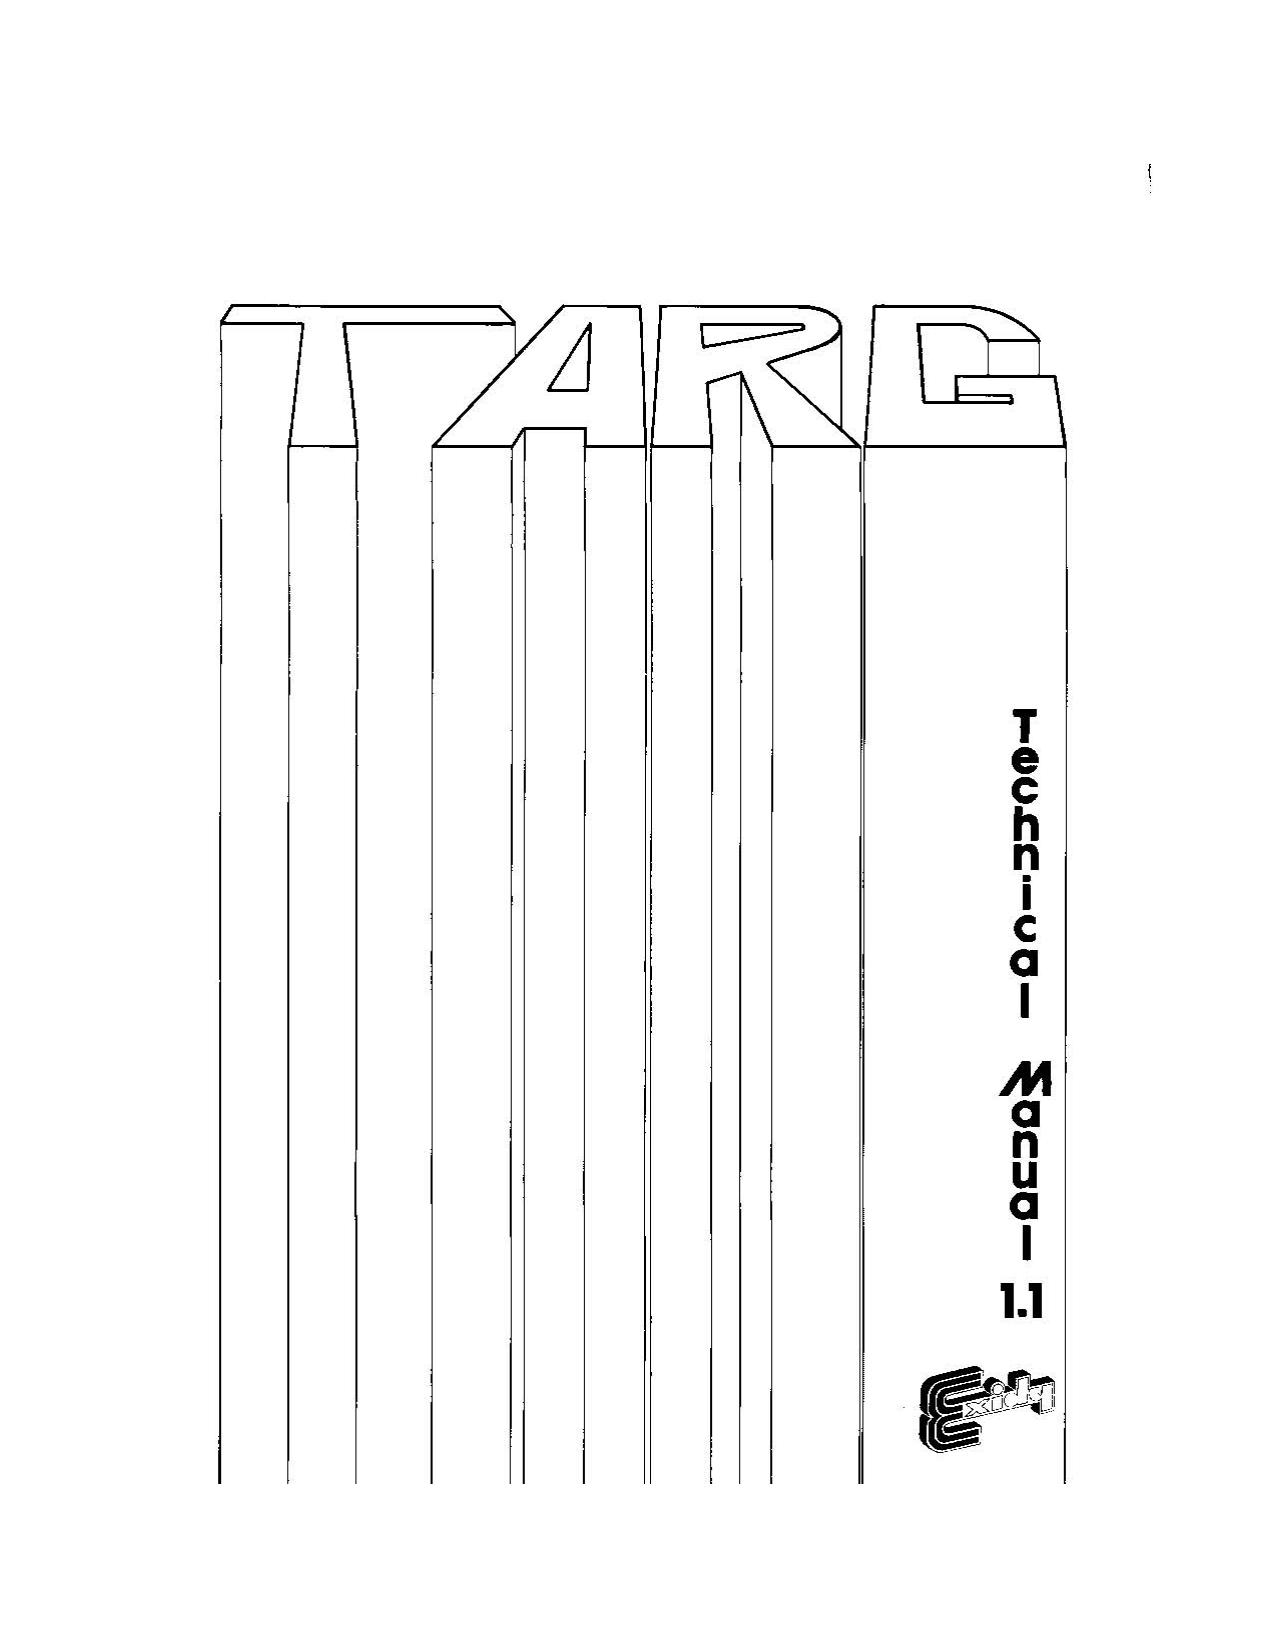 Targ (1.1) (Technical) (U)